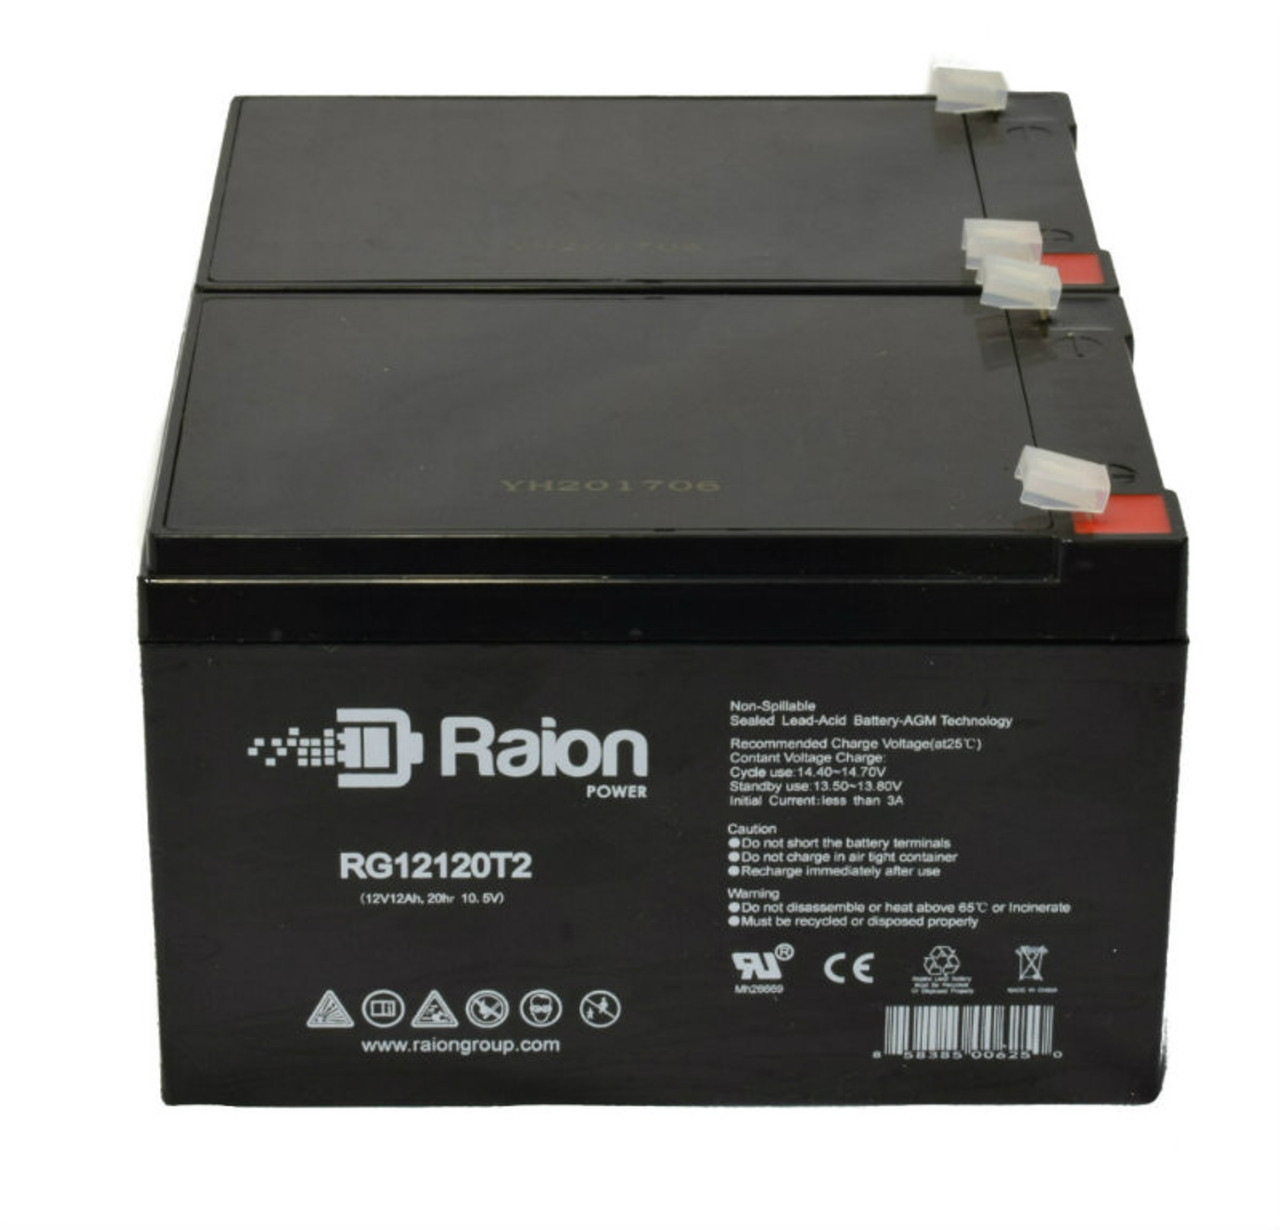 Raion Power 12V 12Ah Non-Spillable Compatible Replacement Battery for Kinghero SJ12V12Ah-D - (2 Pack)